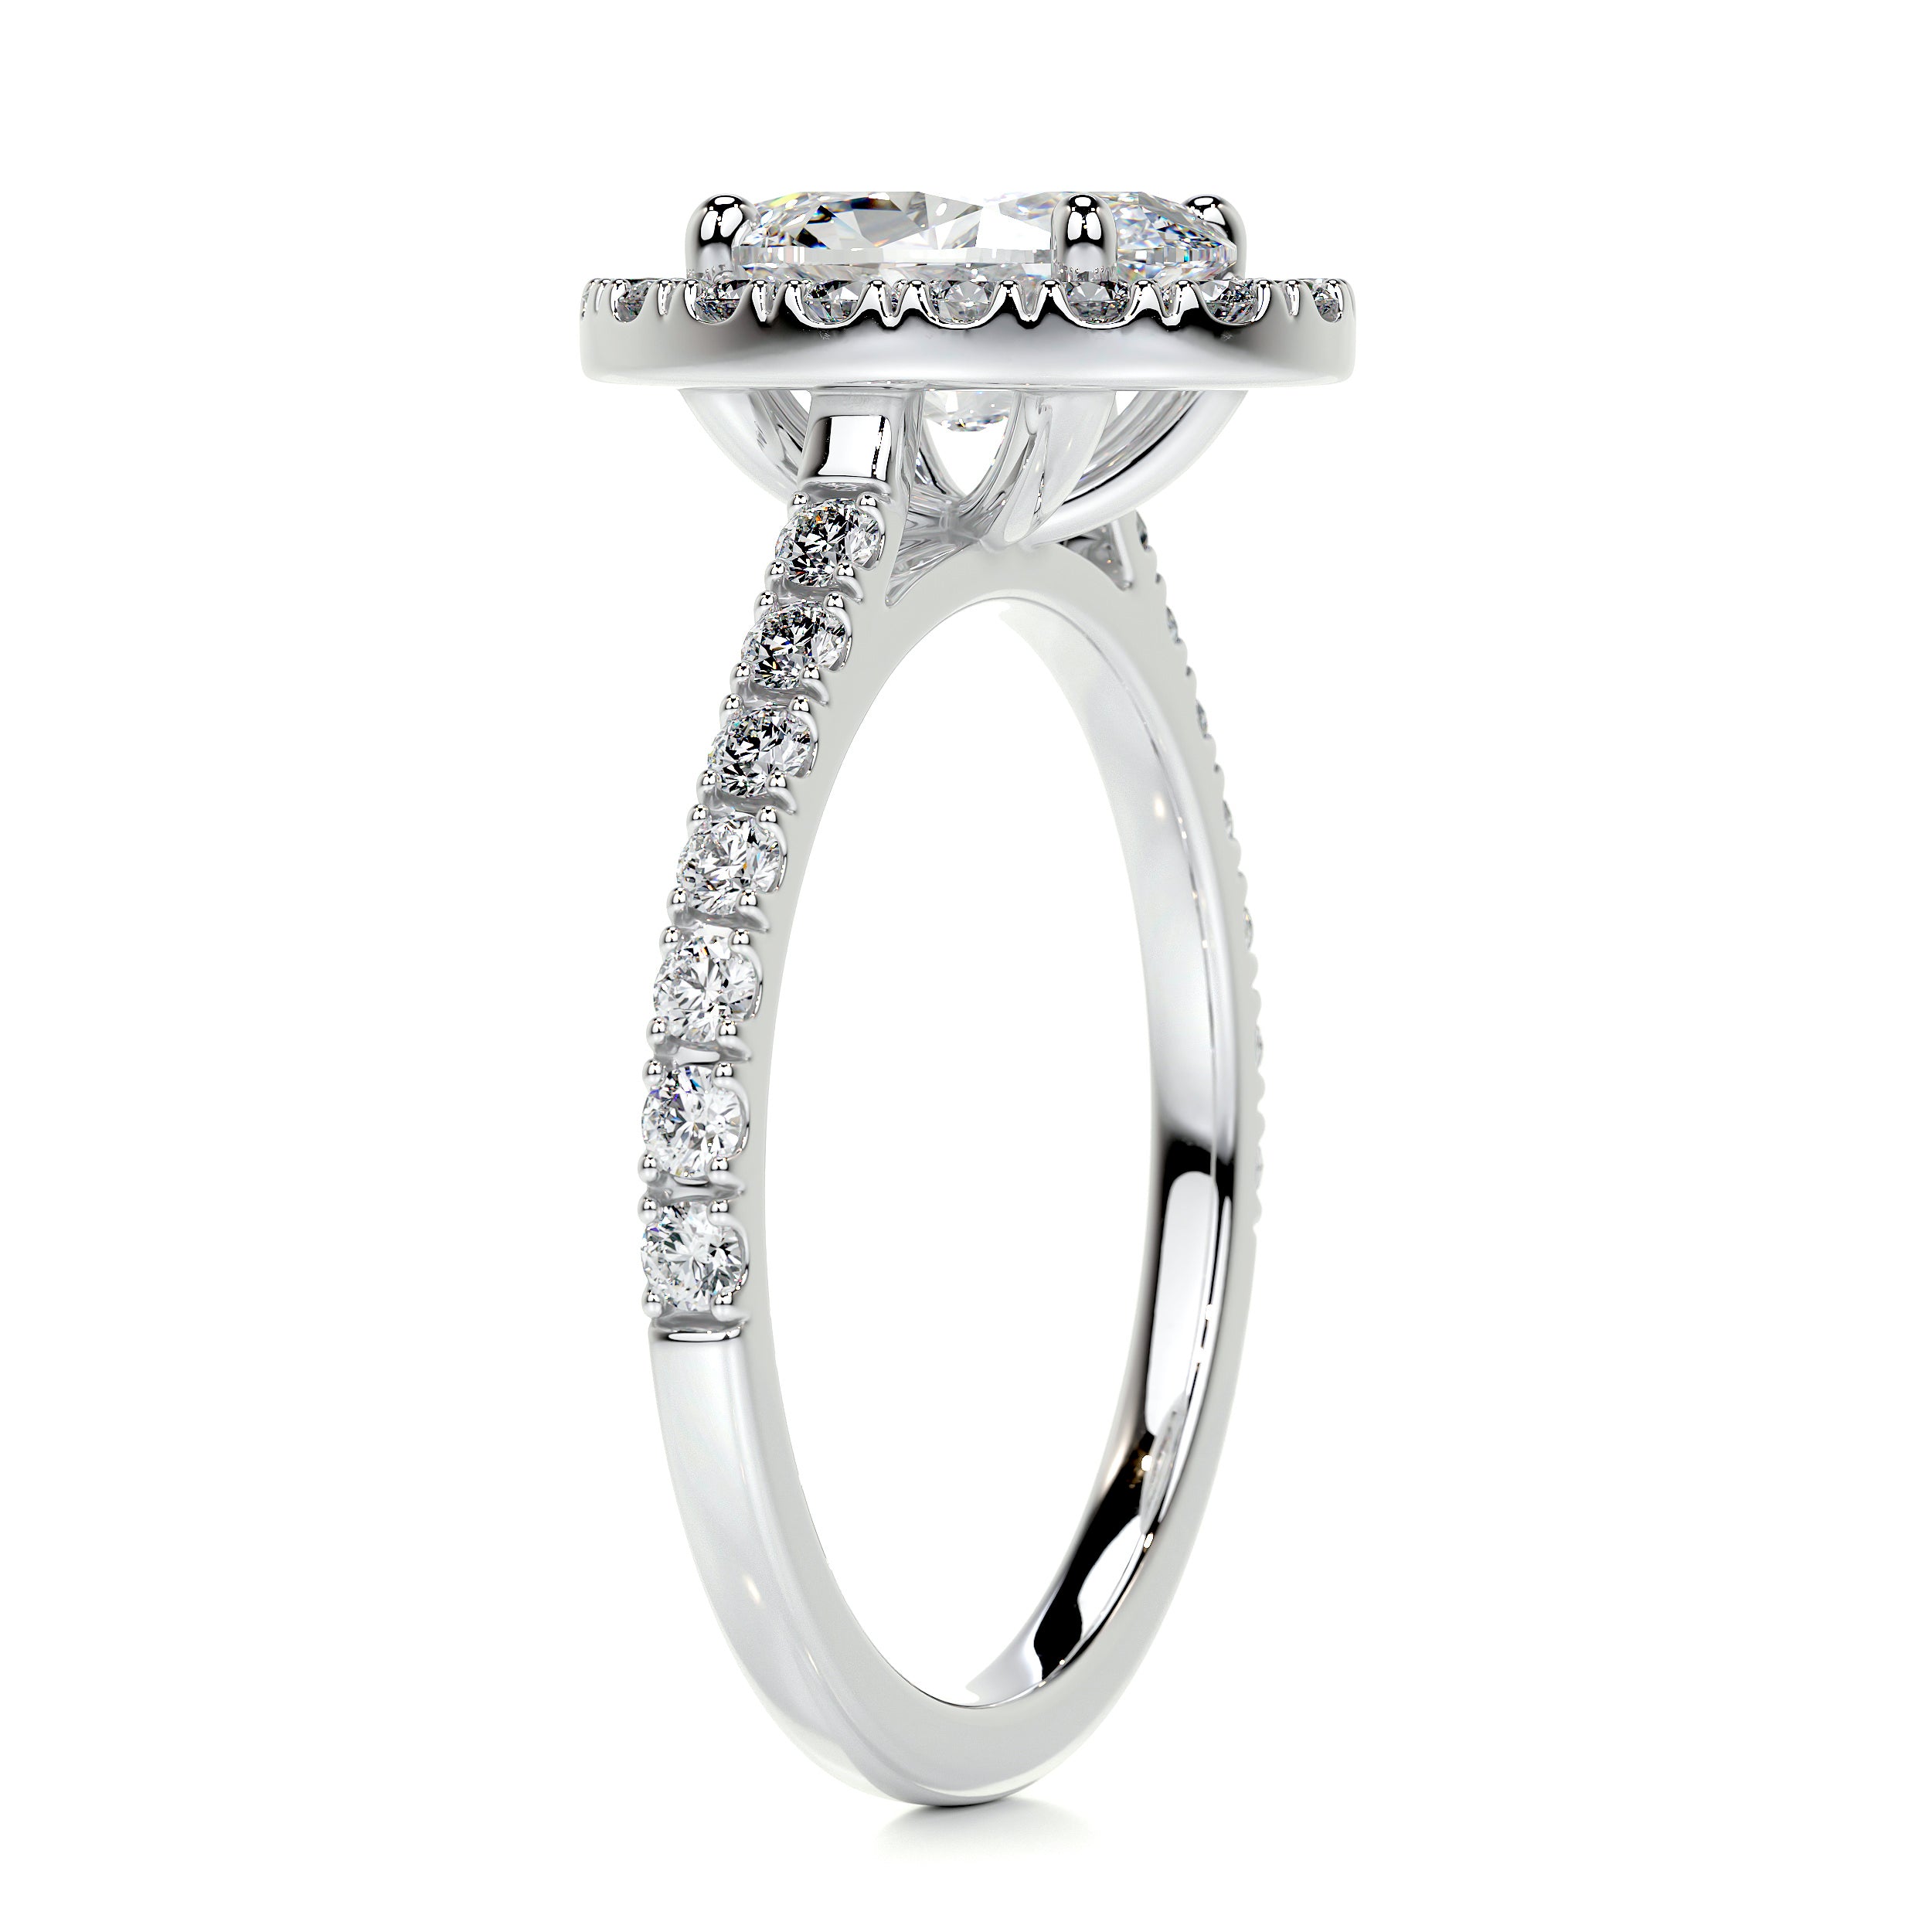 Maria Diamond Engagement Ring - 18K White Gold